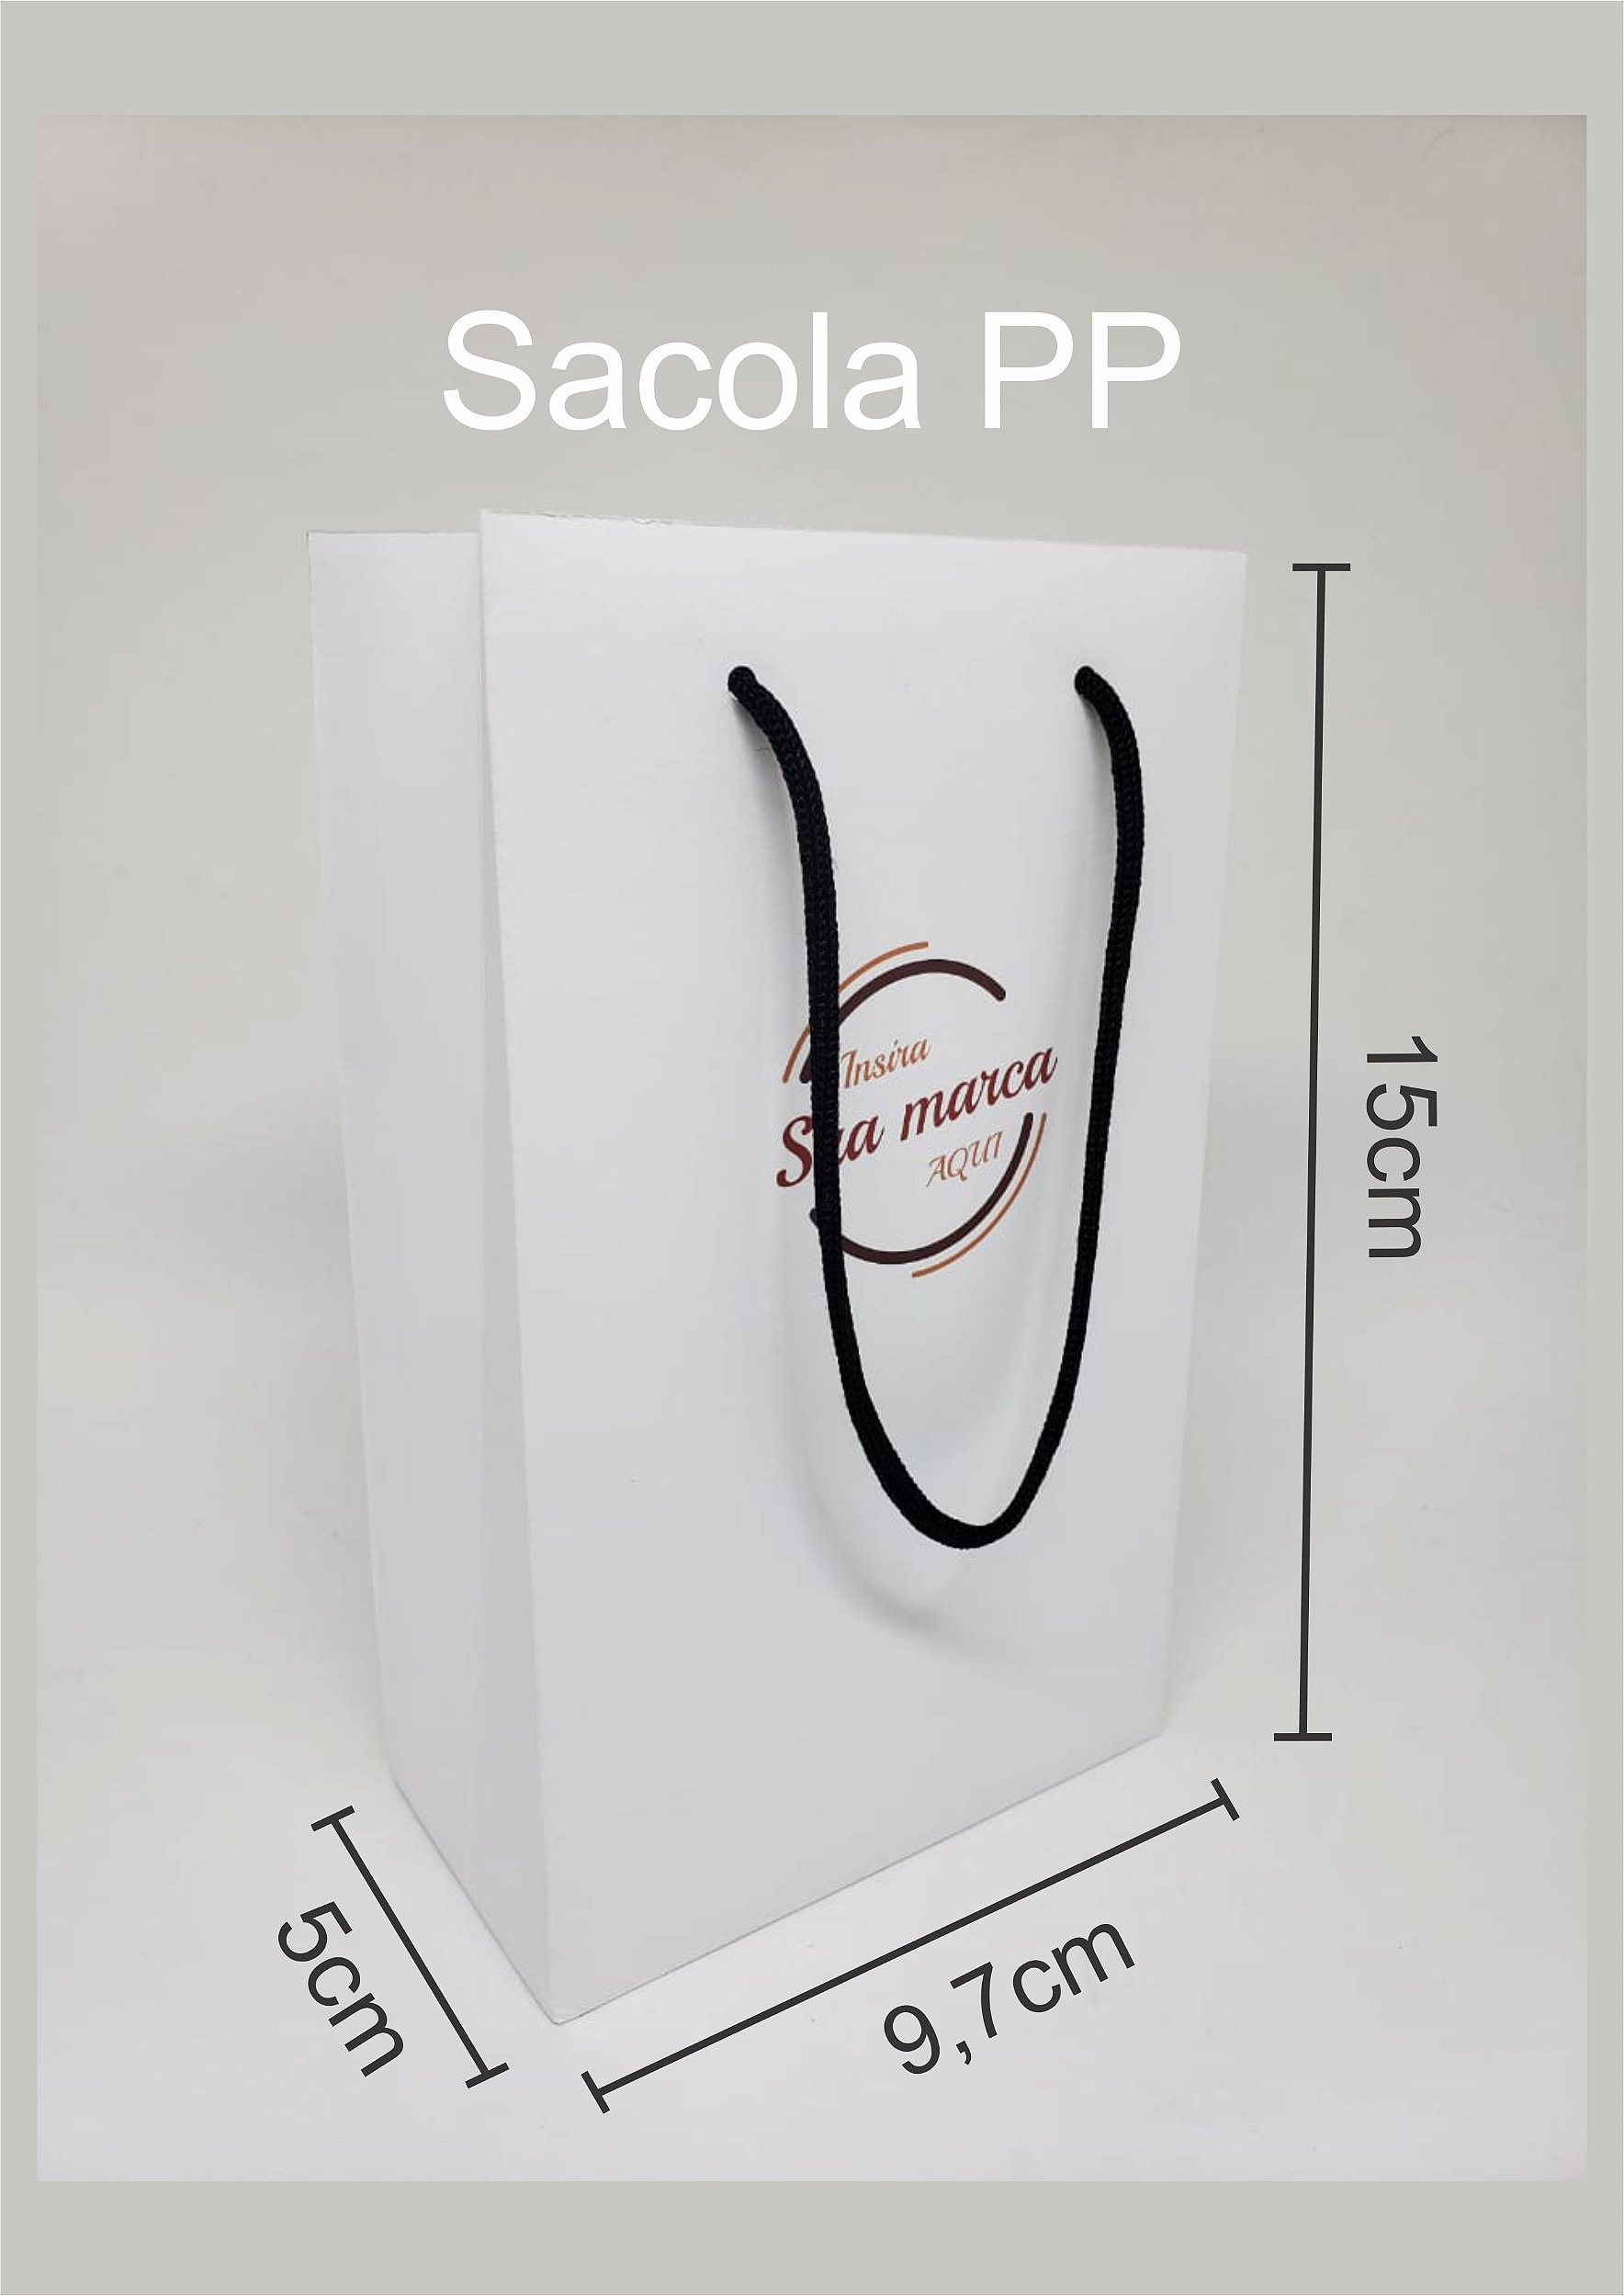 Sacola Personalizada de papel - Formato PP kit com 50 - Atelie da Lola  Conviteria - convites casamento debutante bodas